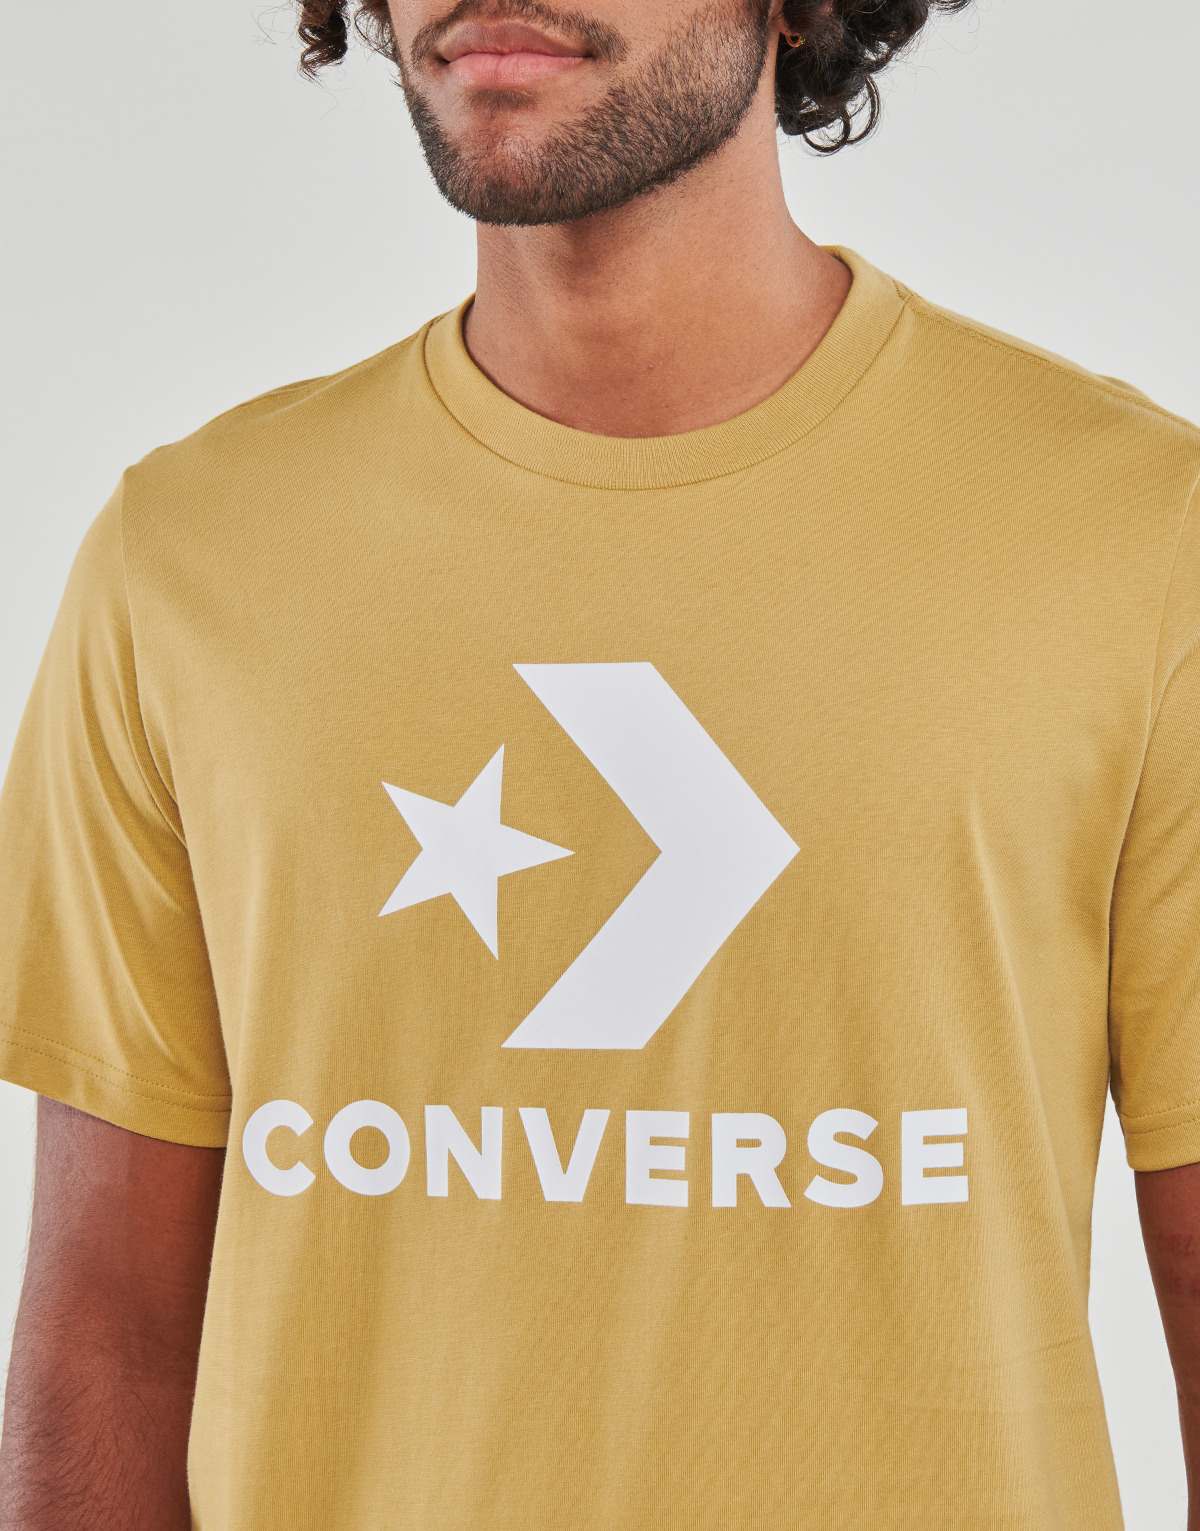 Converse Jaune GO-TO STAR CHEVRON LOGO T-SHIRT mPHWGOOx